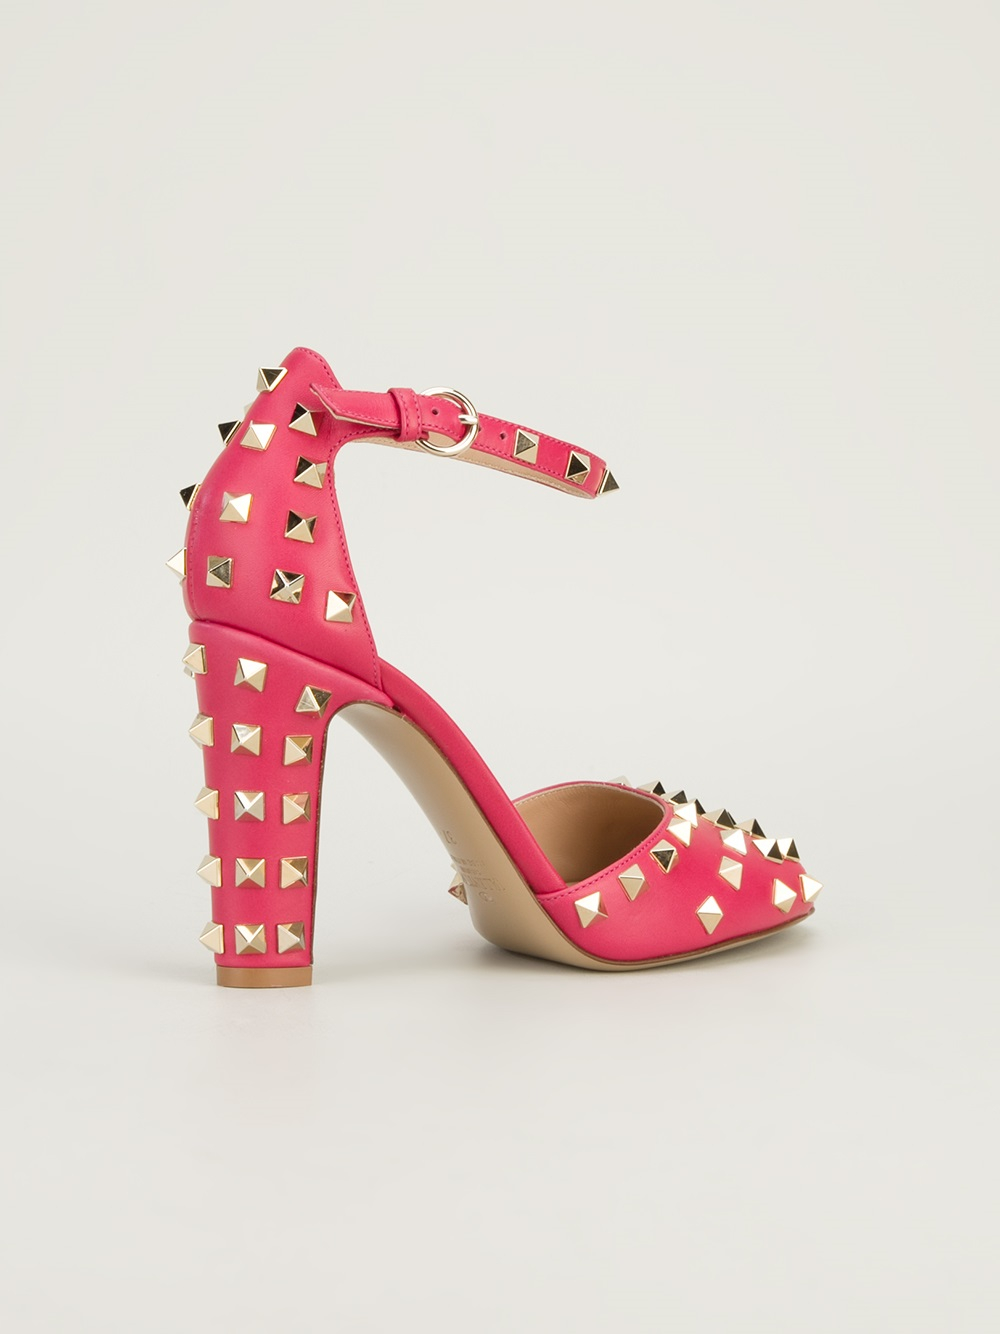 Lyst - Valentino Rockstud Sandal in Pink